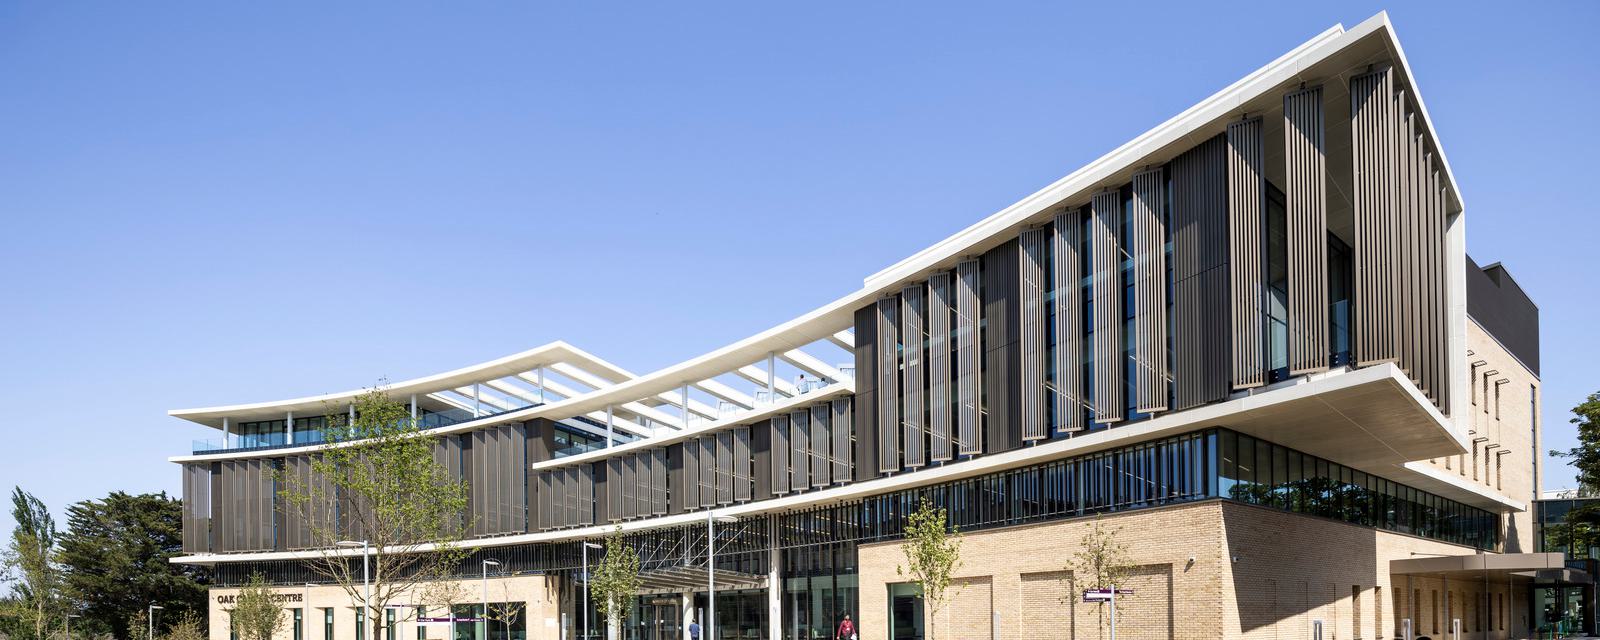 Exterior of new Oak Cancer Centre at Royal Marsden Hospital